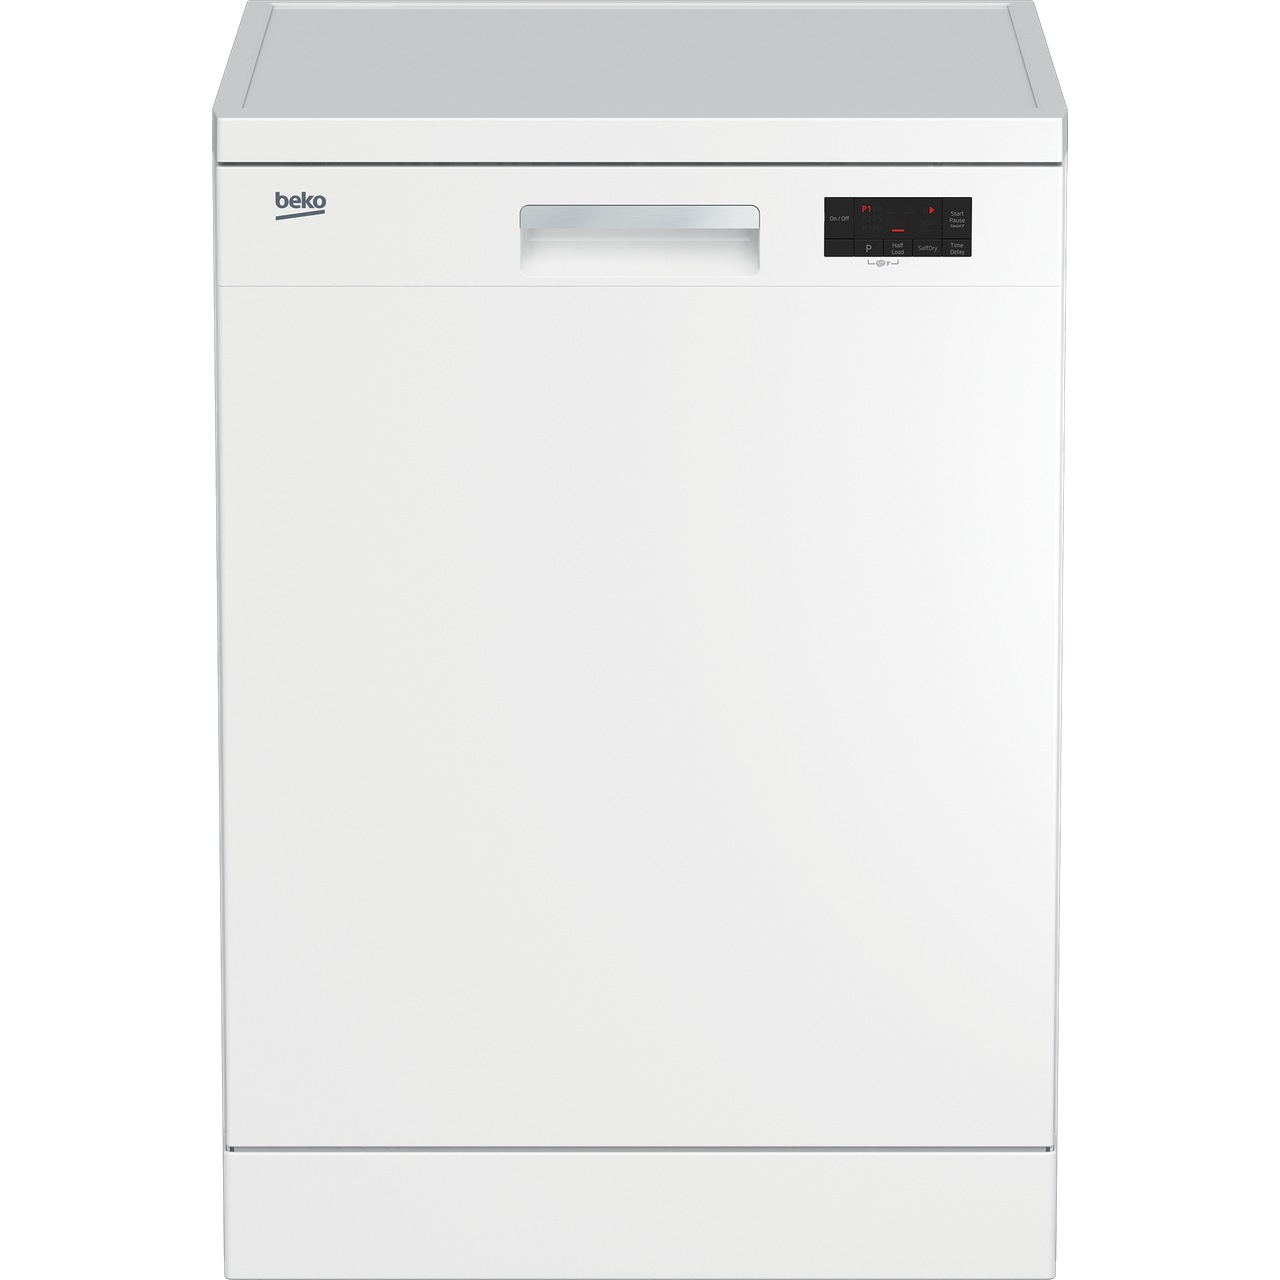 Beko DFN16430W Standard Dishwasher Review